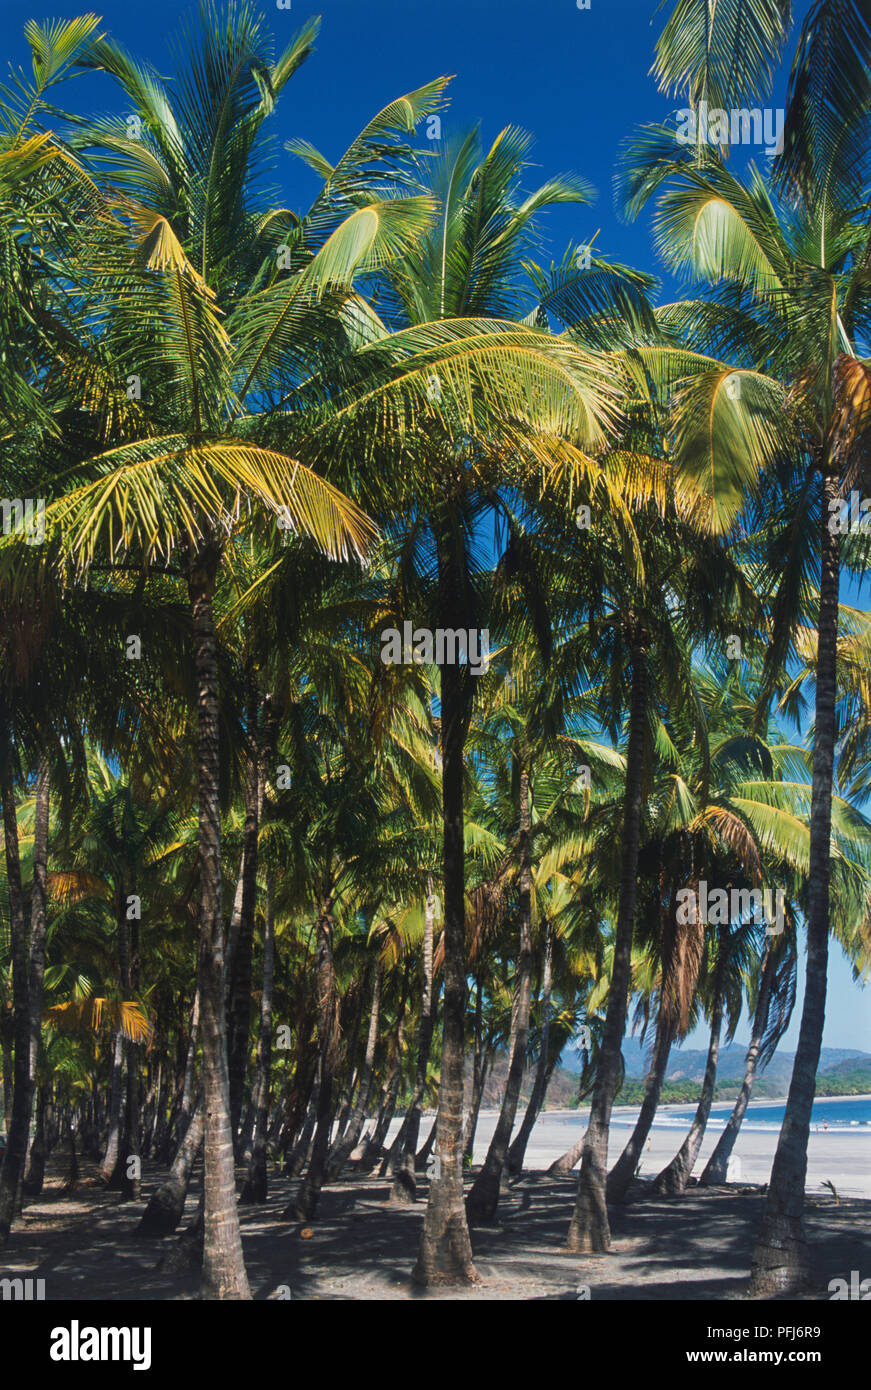 Central America, Costa Rica, Guanacaste, Samara, Playa Carillo, Coconut Palms (Cocos nucifera) providing shaded area behind beach Stock Photo